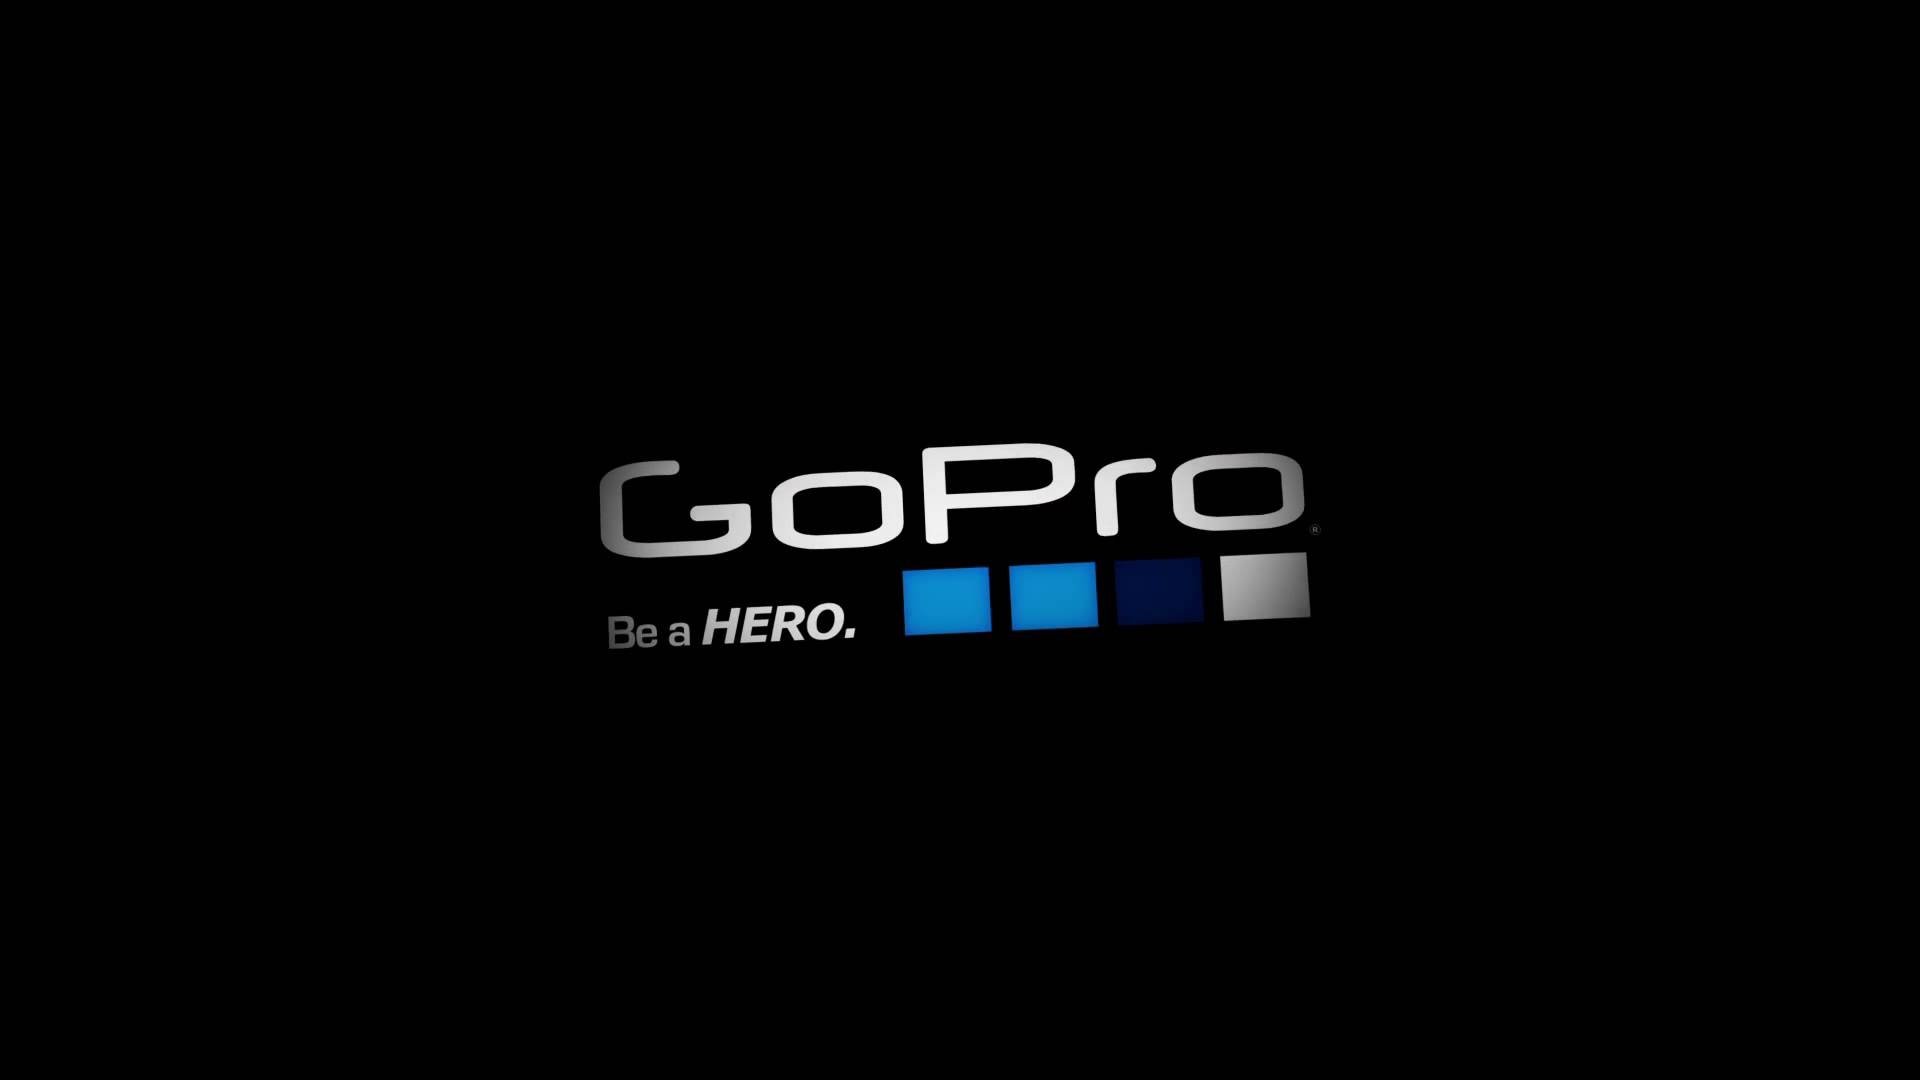 Gopro logo